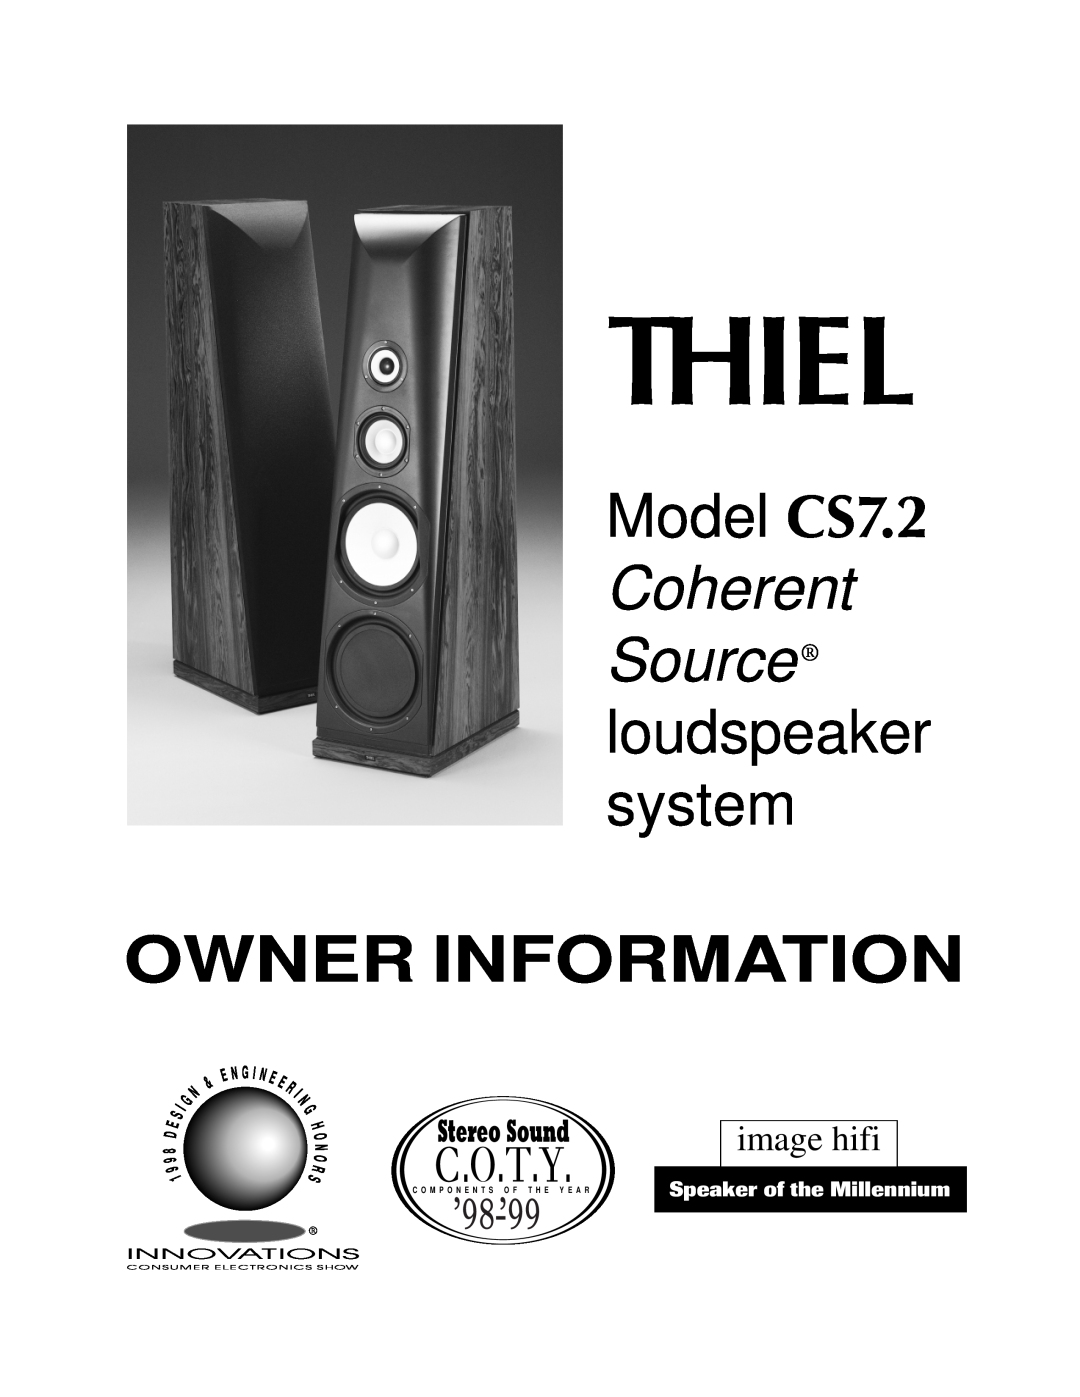 Thiel Audio Products manual Thiel, Owner Information, Model CS7.2 Coherent Source loudspeaker system, image hifi 